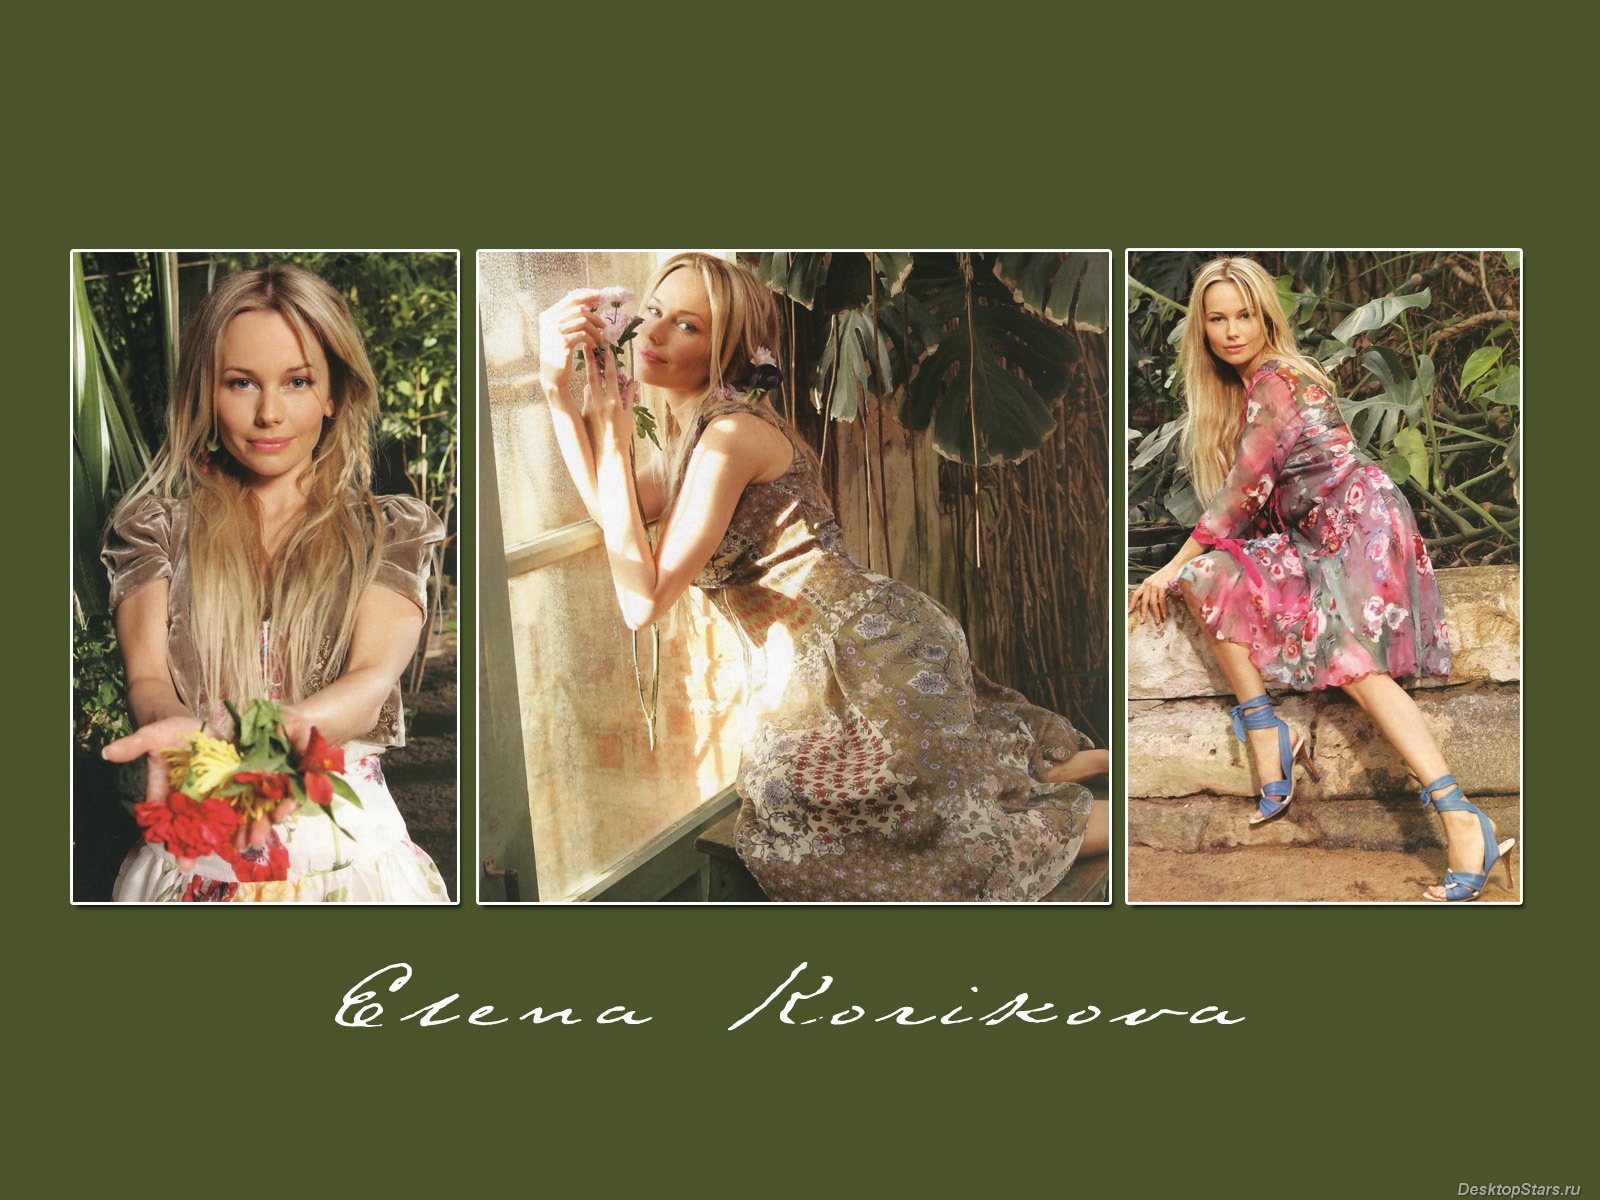 Elena Korikova #011 - 1600x1200 Wallpapers Pictures Photos Images